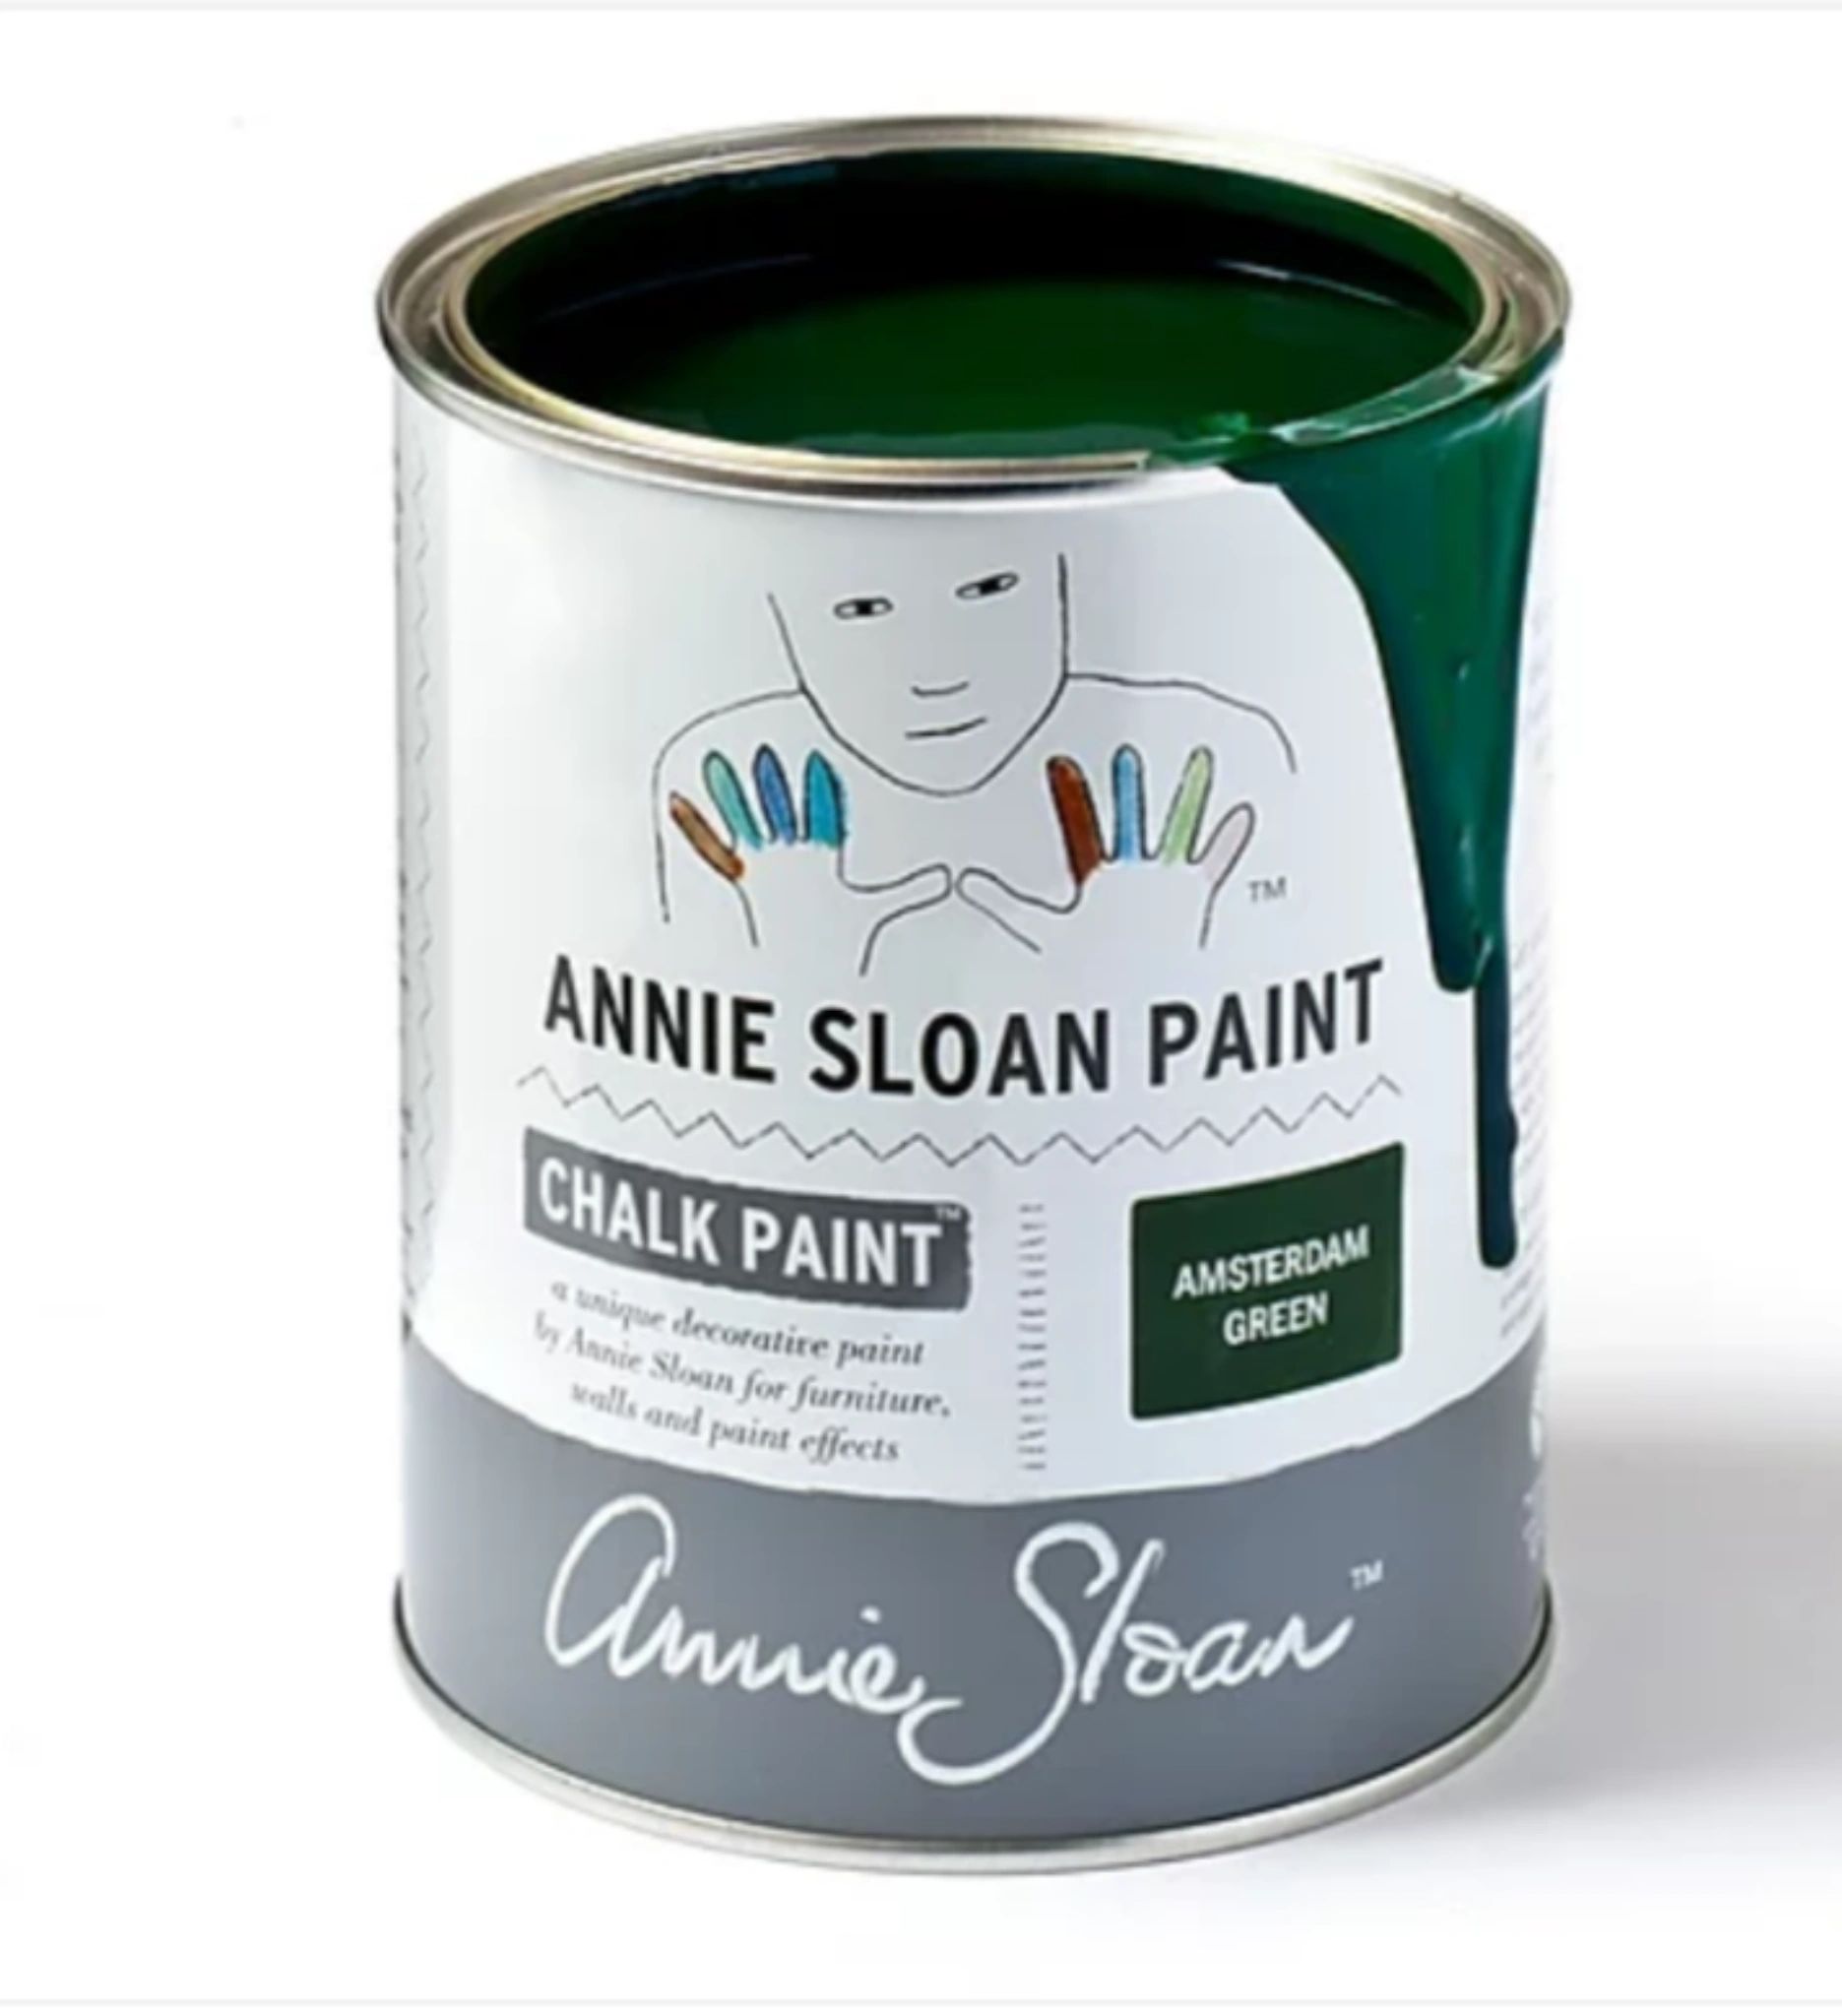 Annie Sloan Paint. Chalk Paint. Amsterdam Green